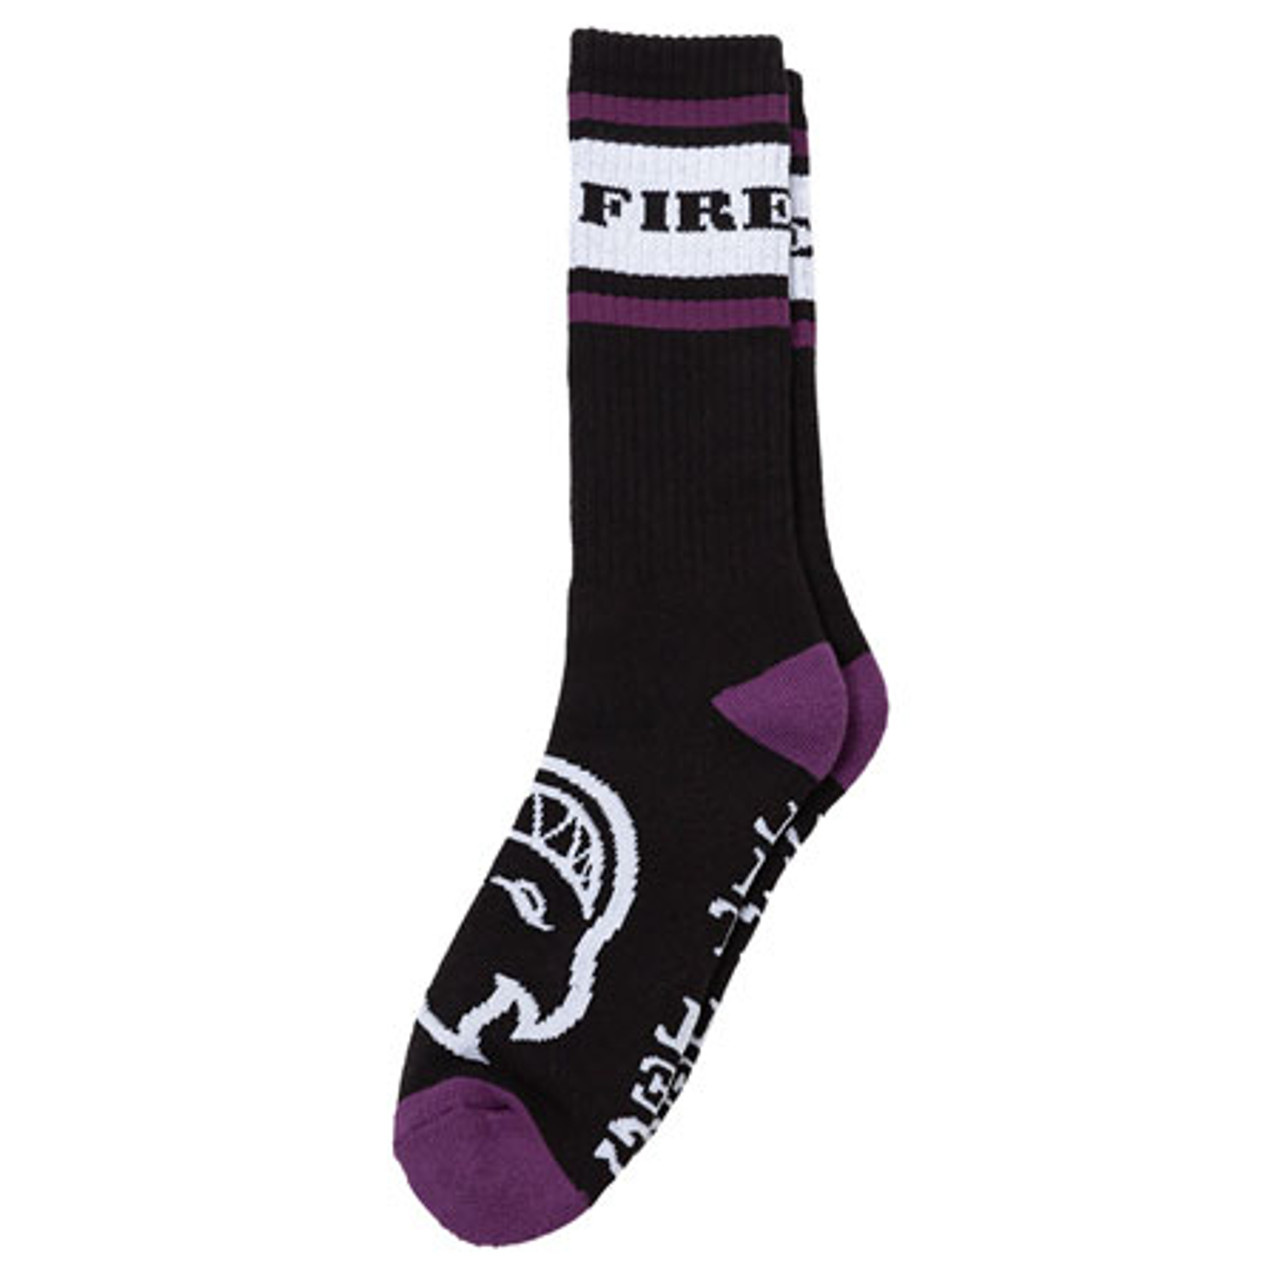 Spitfire OG Classic Crew Socks Black Purple White One Size